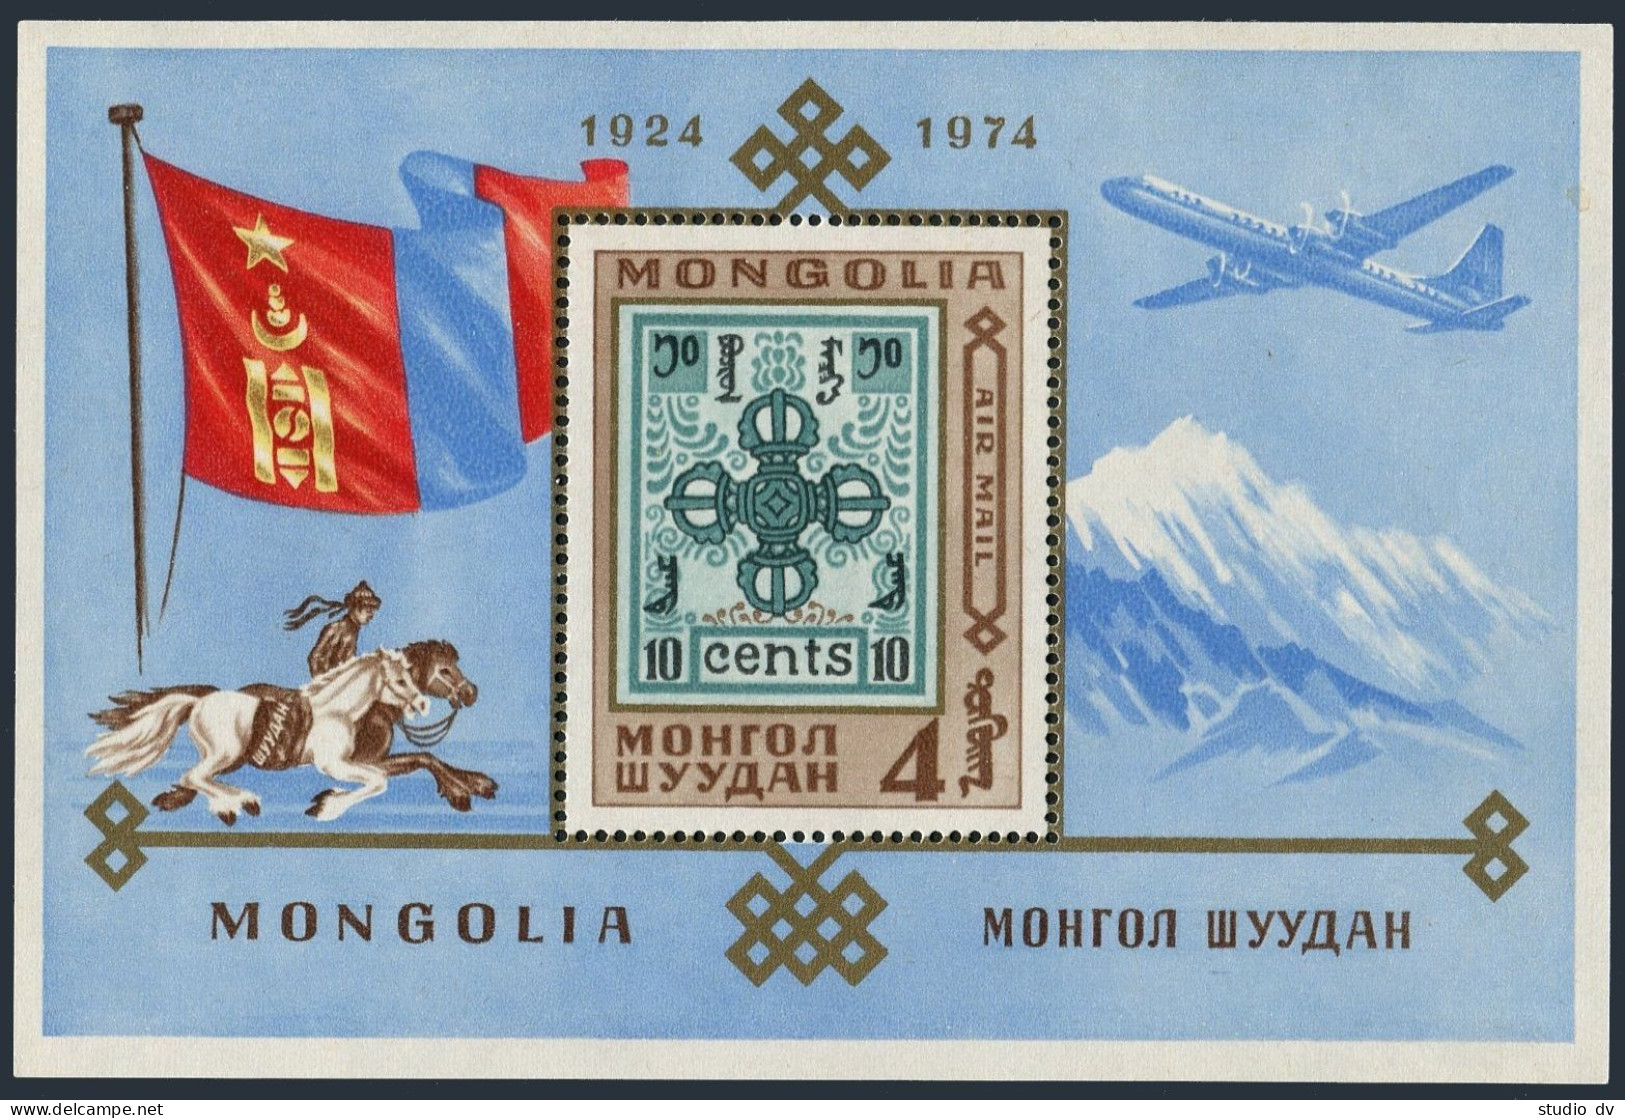 Mongolia C56,lightly Hinged. Mi Bl.35. Stamp Of Mongolia-50,1974. Flag,Postrider - Mongolia